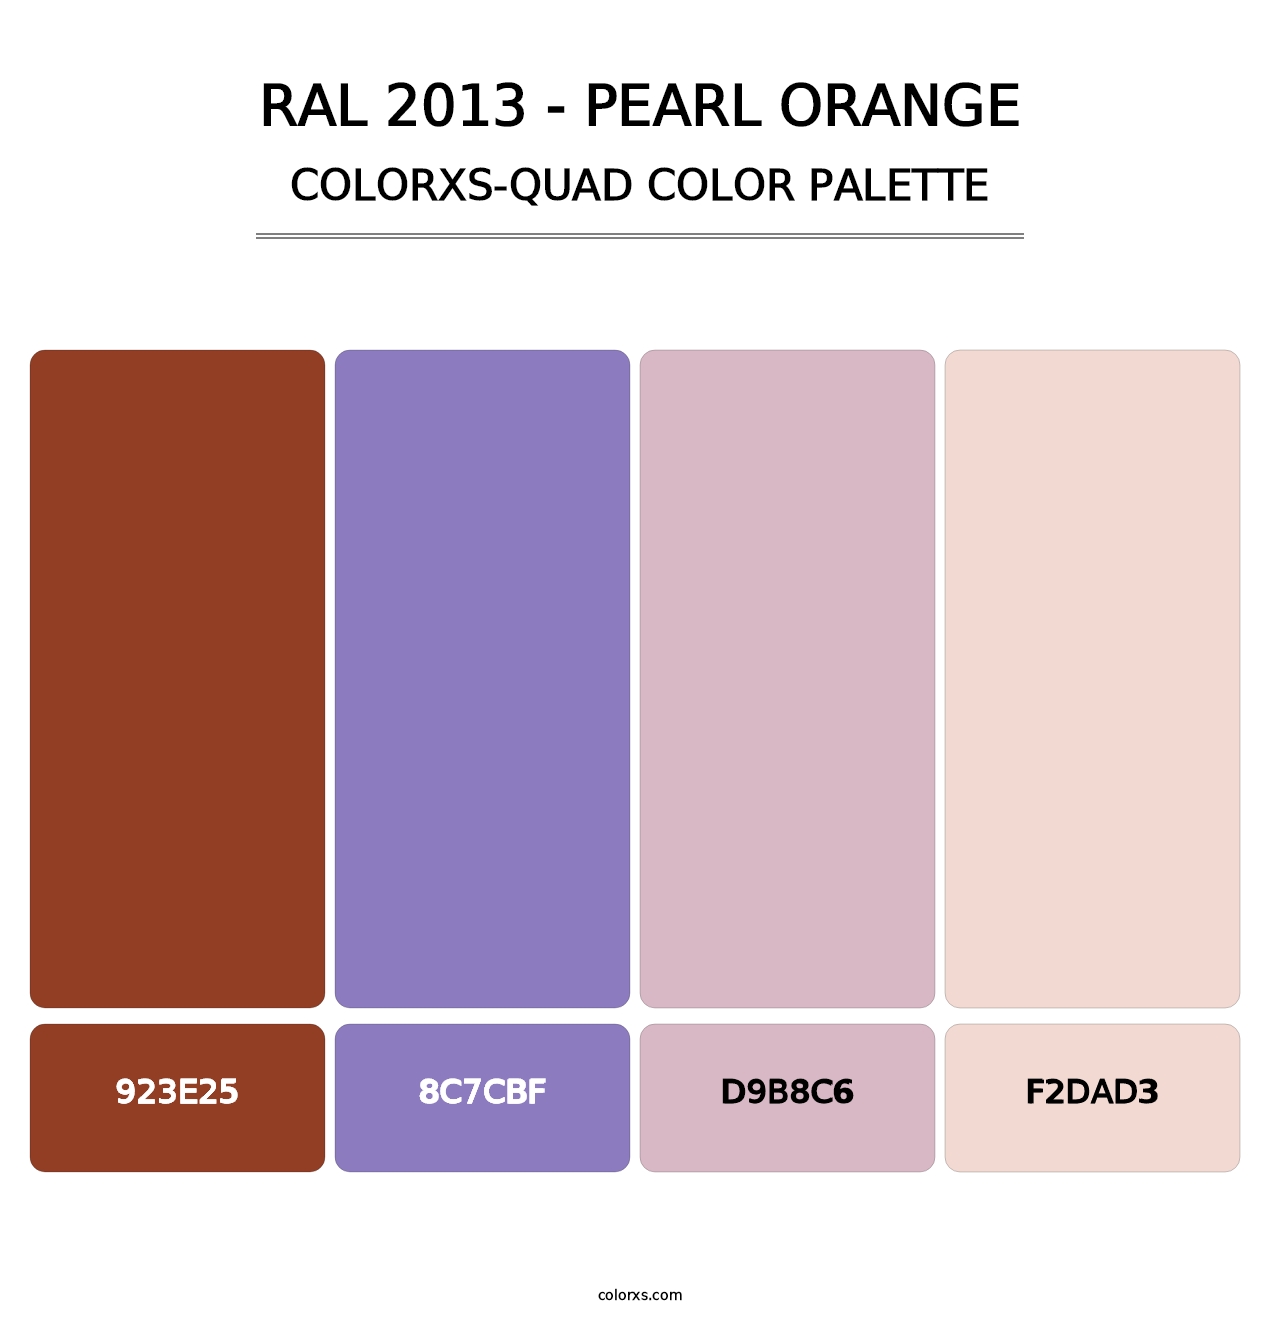 RAL 2013 - Pearl Orange - Colorxs Quad Palette